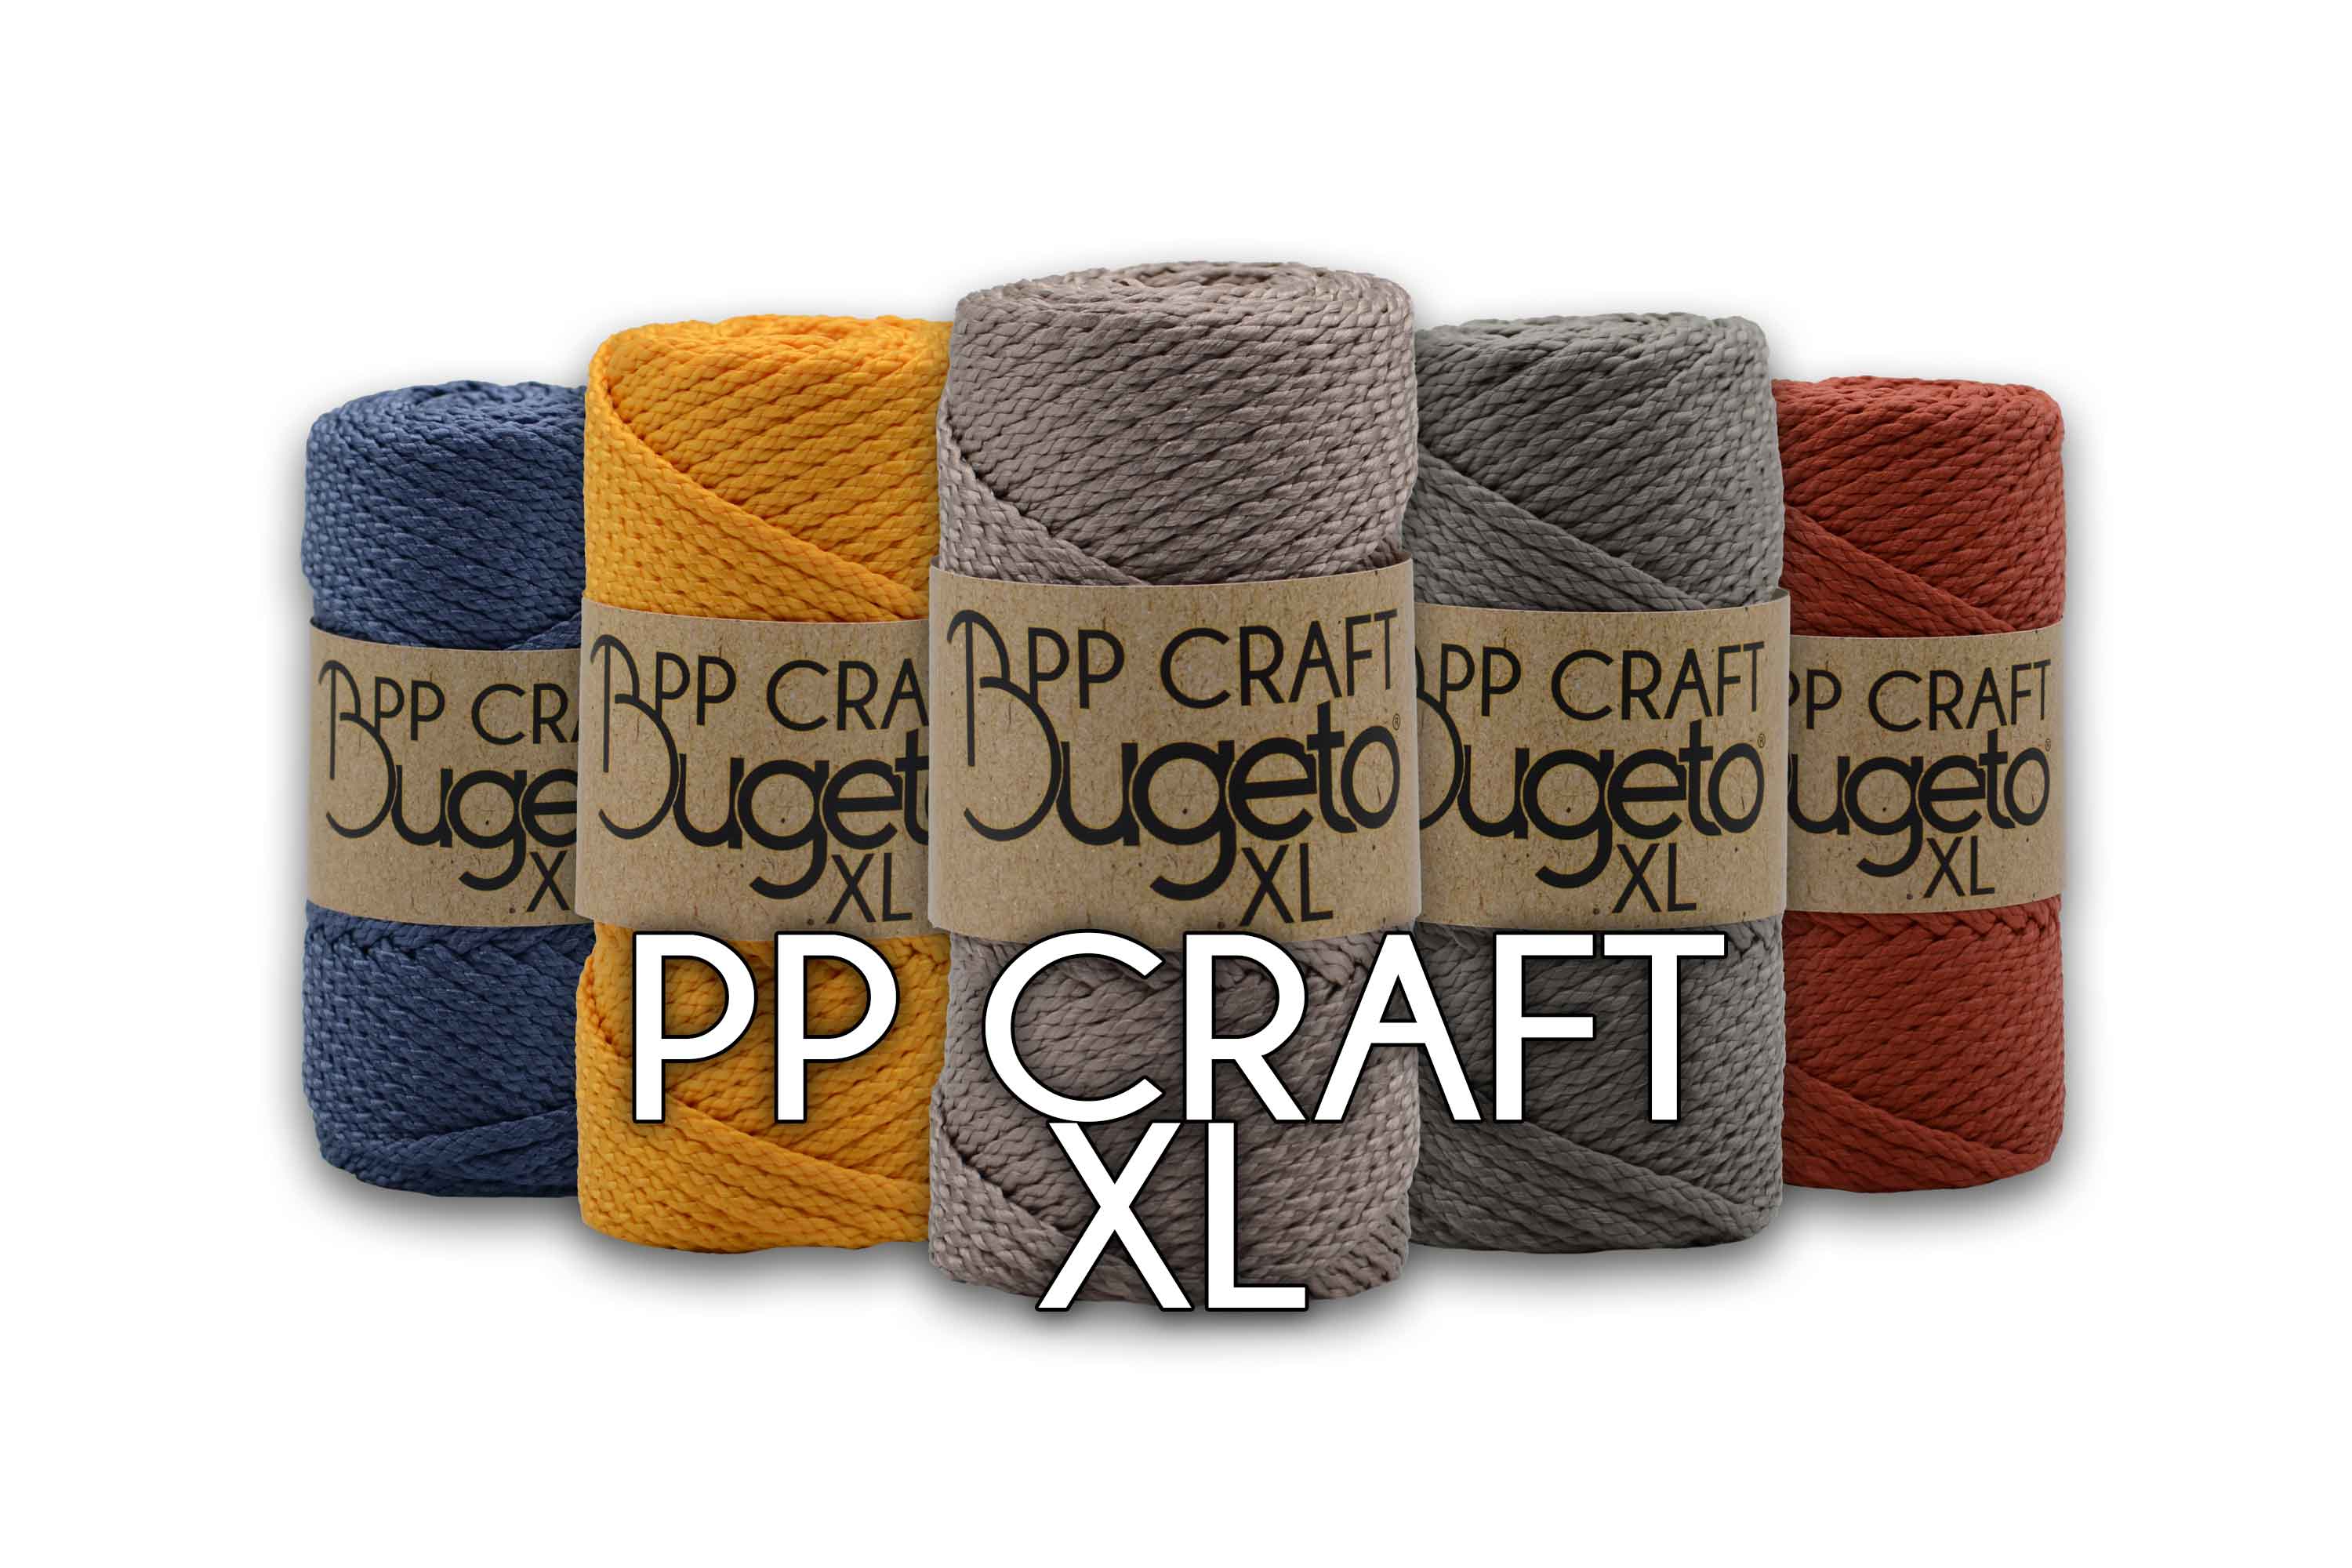 polyproplene yarns pp craft xl pp soft thick yarn bugeto yarn